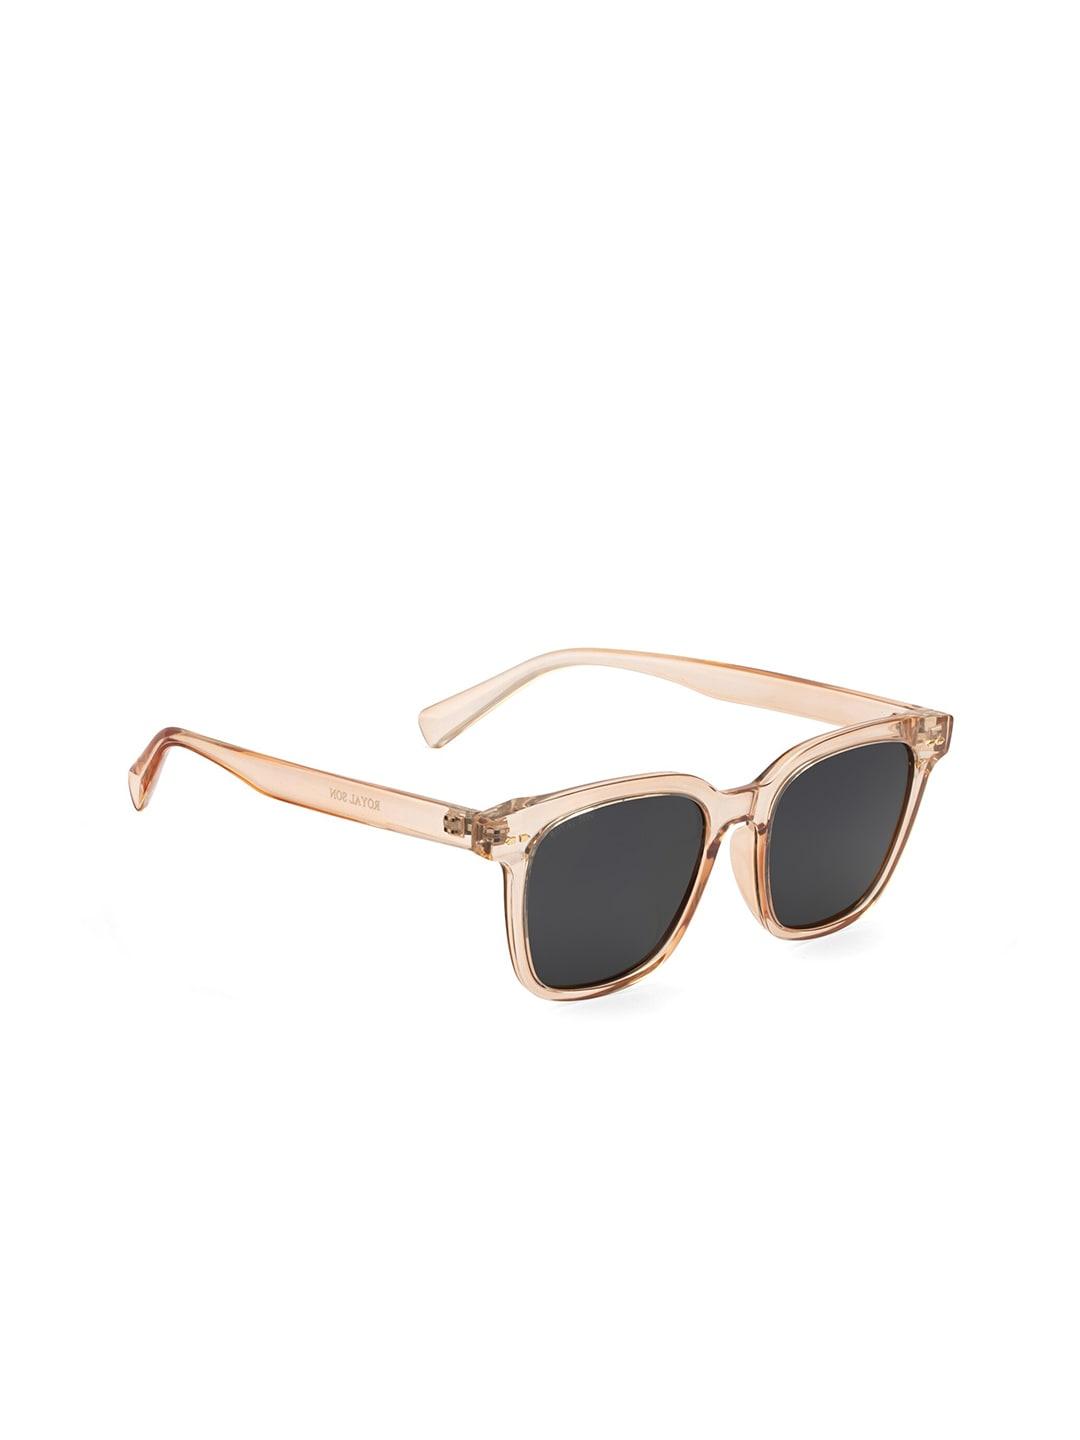 ROYAL SON Unisex Black Lens & Brown Square Sunglasses with Polarised Lens